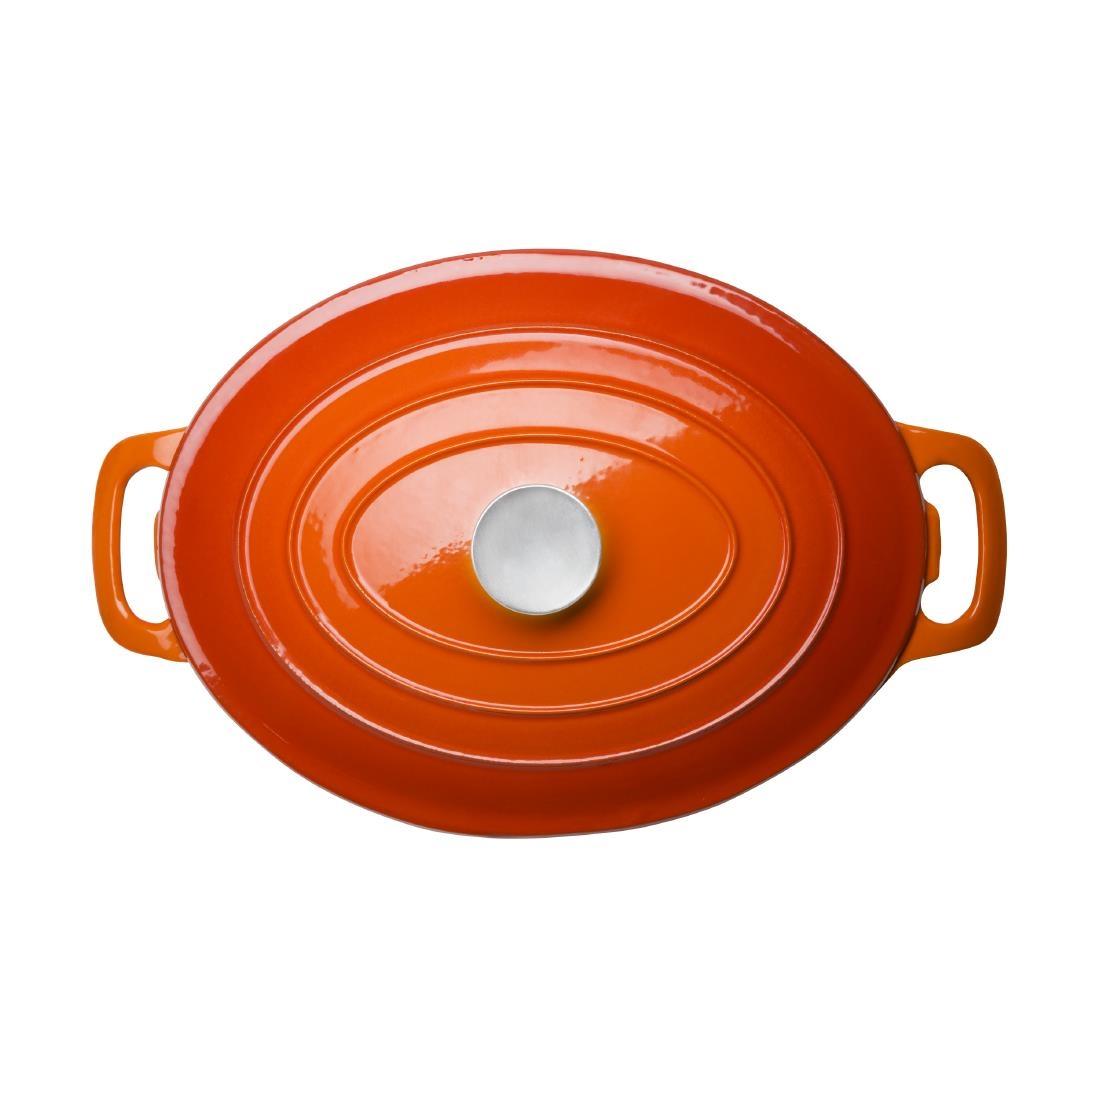 Vogue Orange Oval Casserole Dish 6Ltr - GH312  - 5